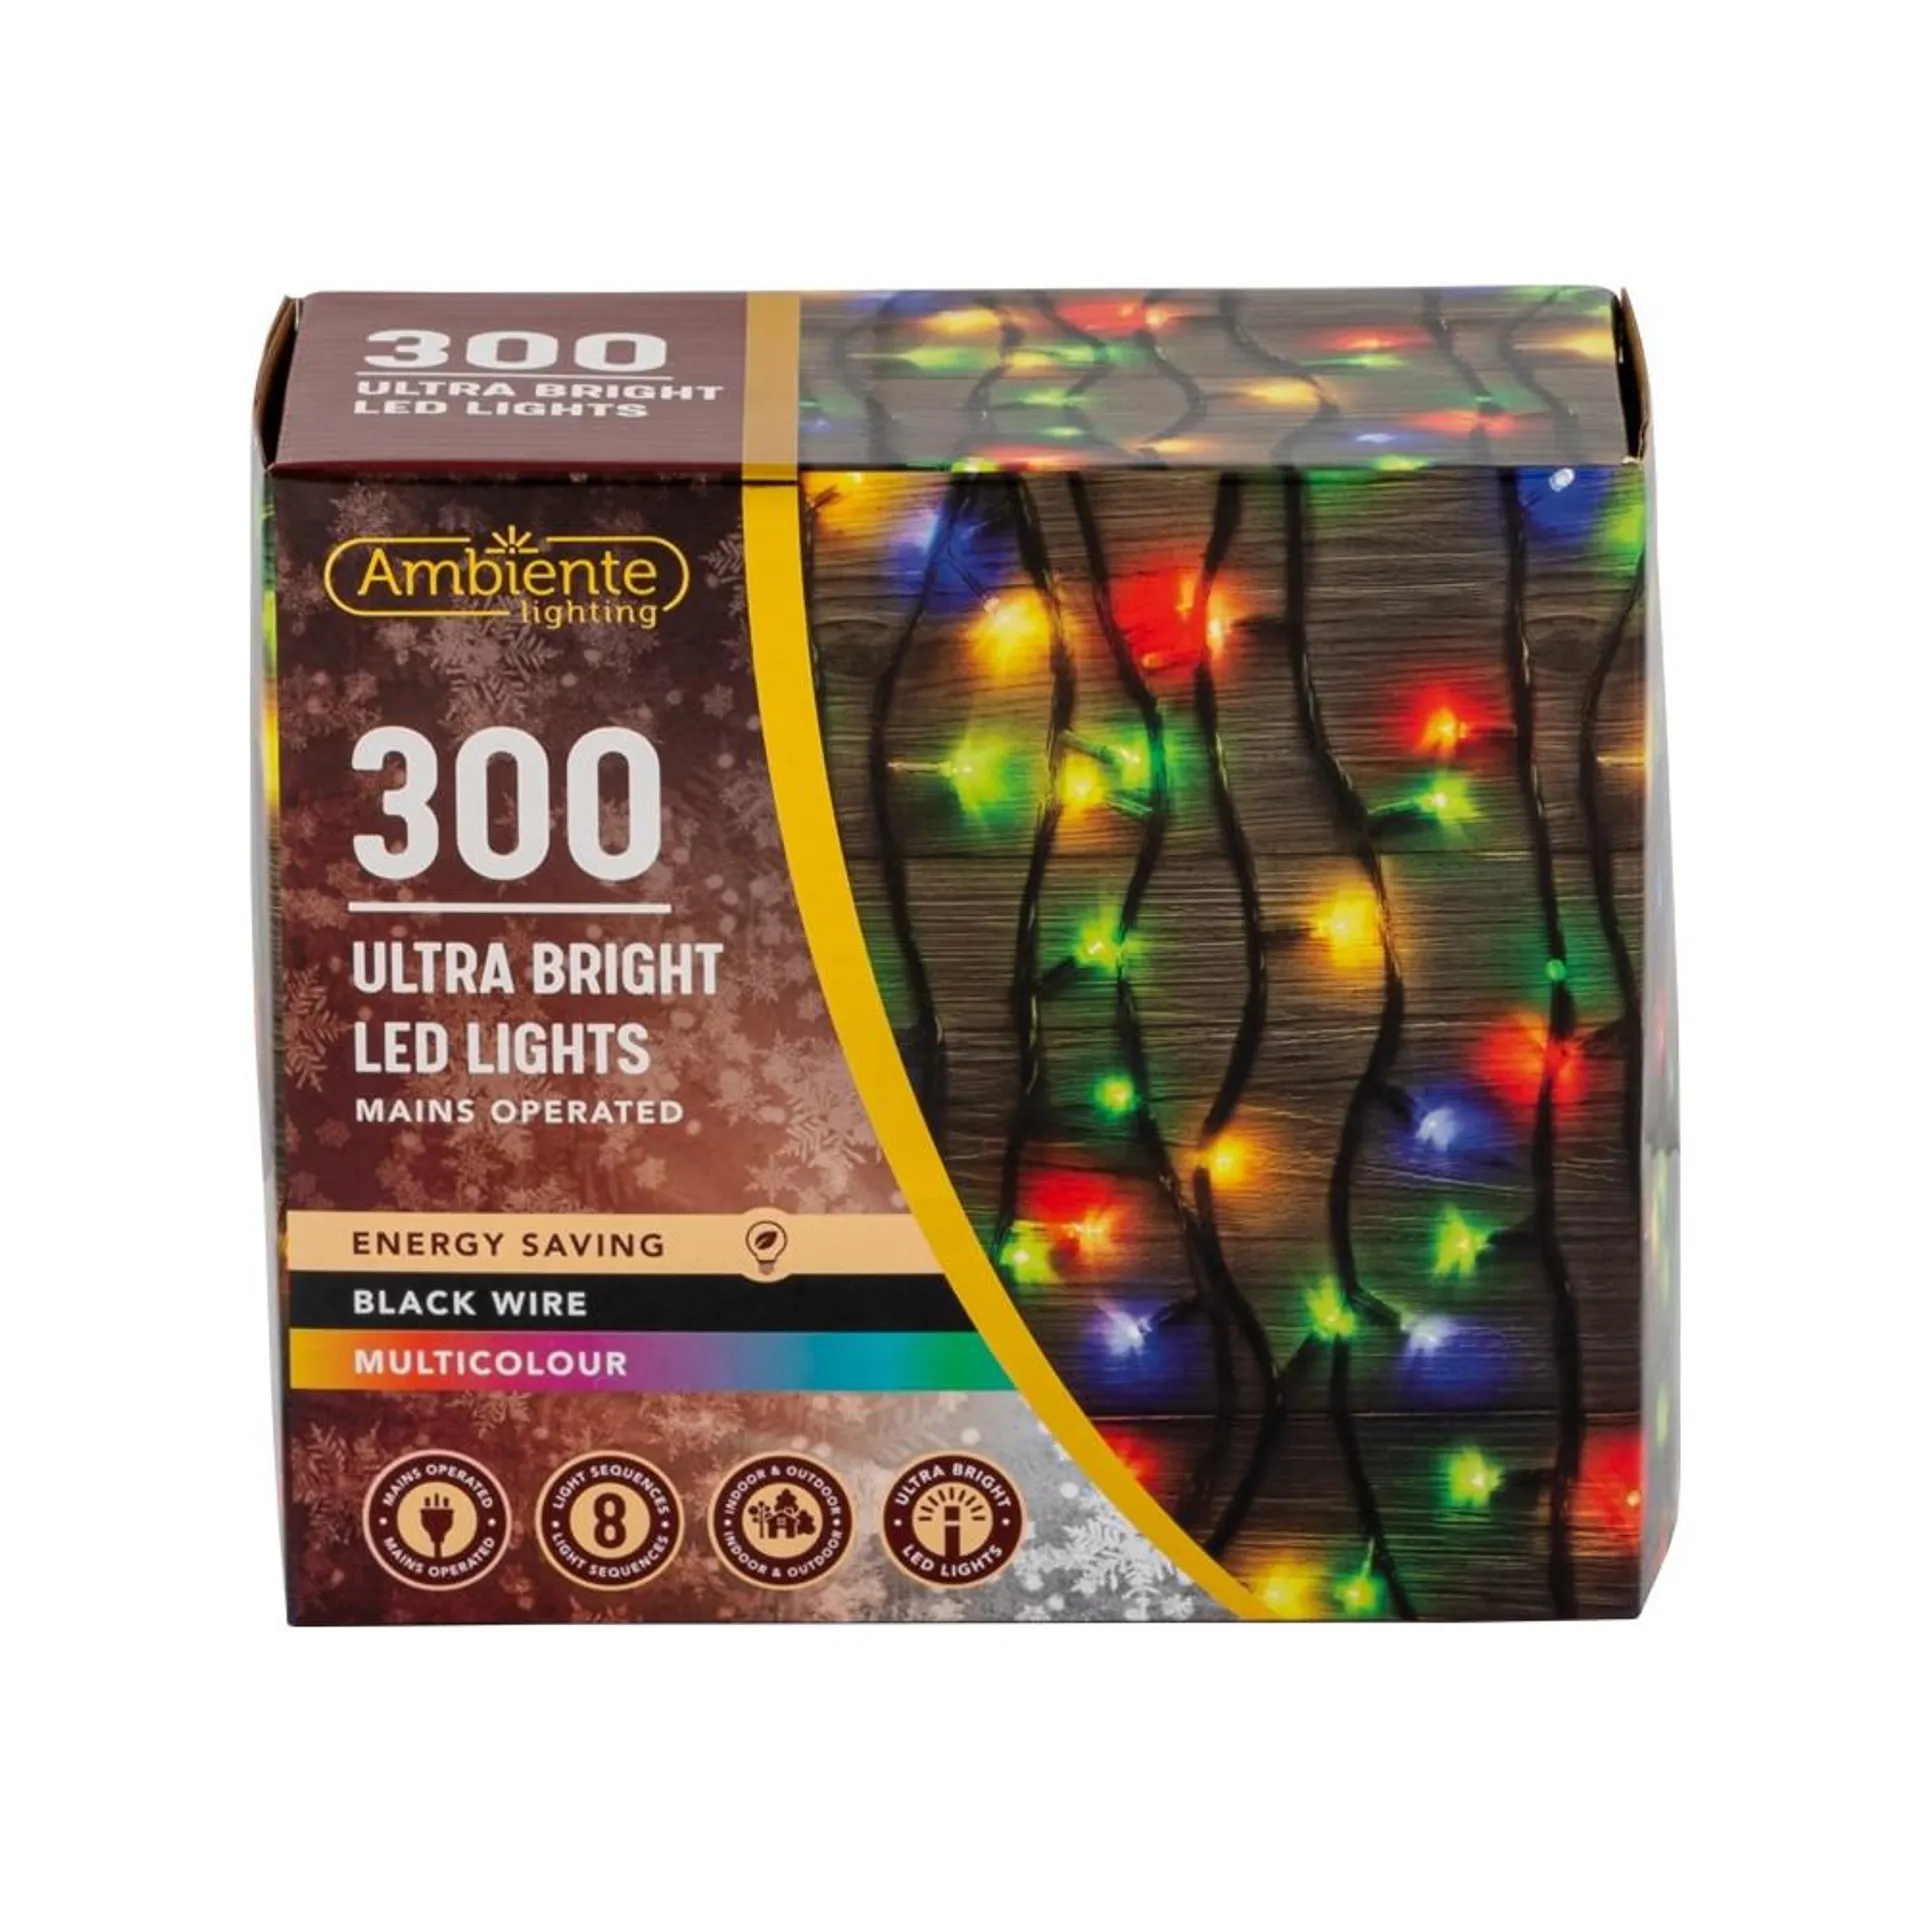 300 ULTRA BRIGHT LED LIGHTS - MULTICOLOUR